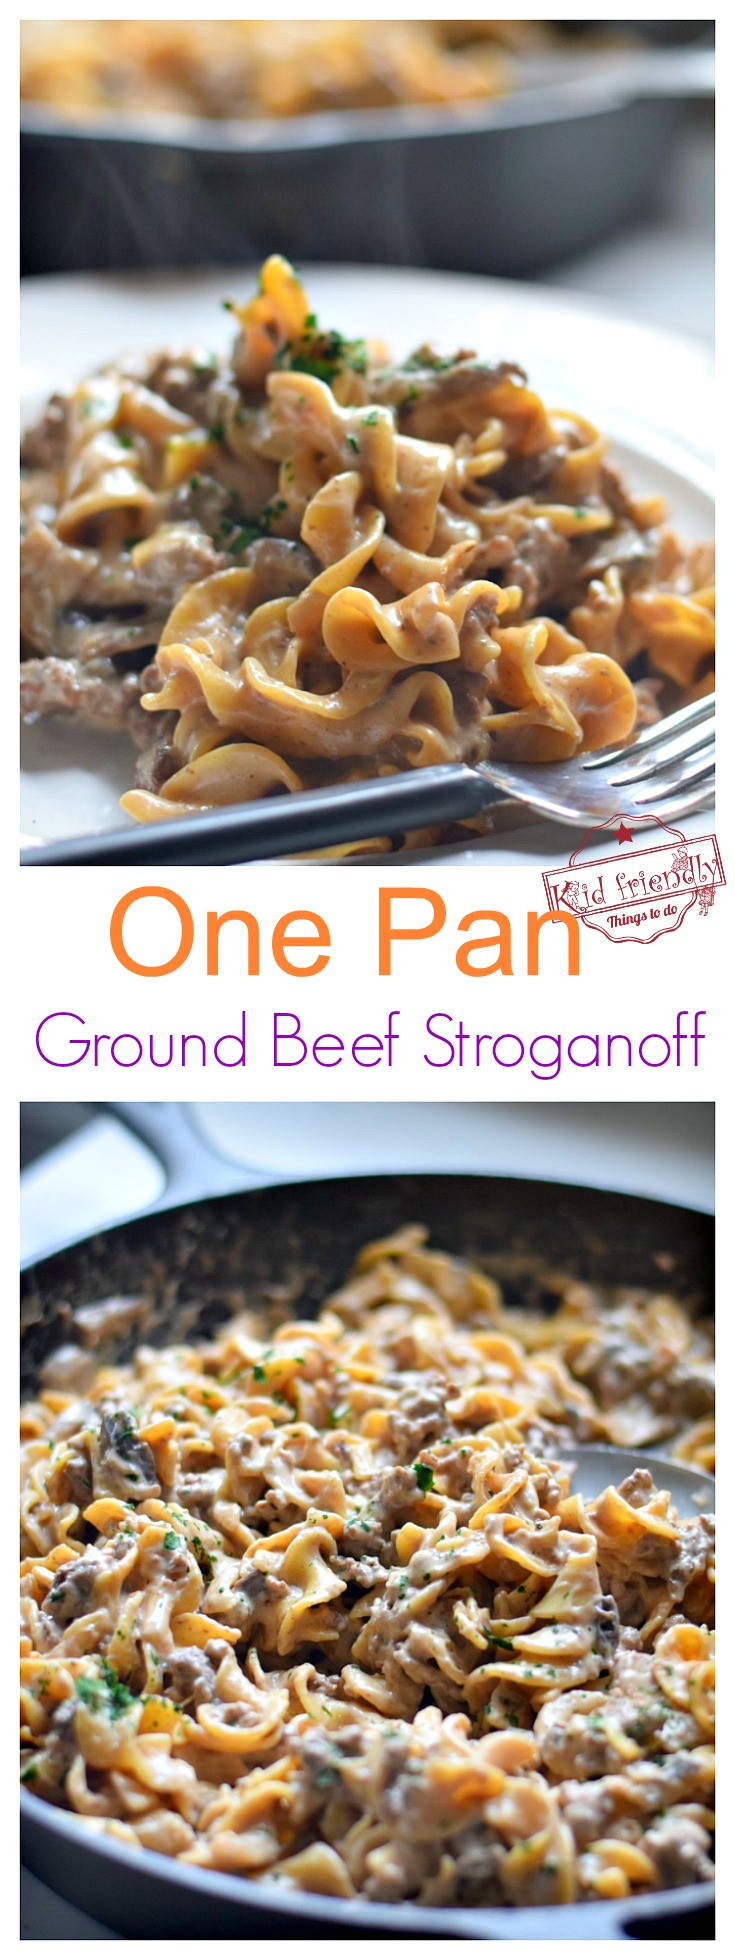 One Pot Ground Beef Recipes
 e Pot Ground Beef Stroganoff Recipe